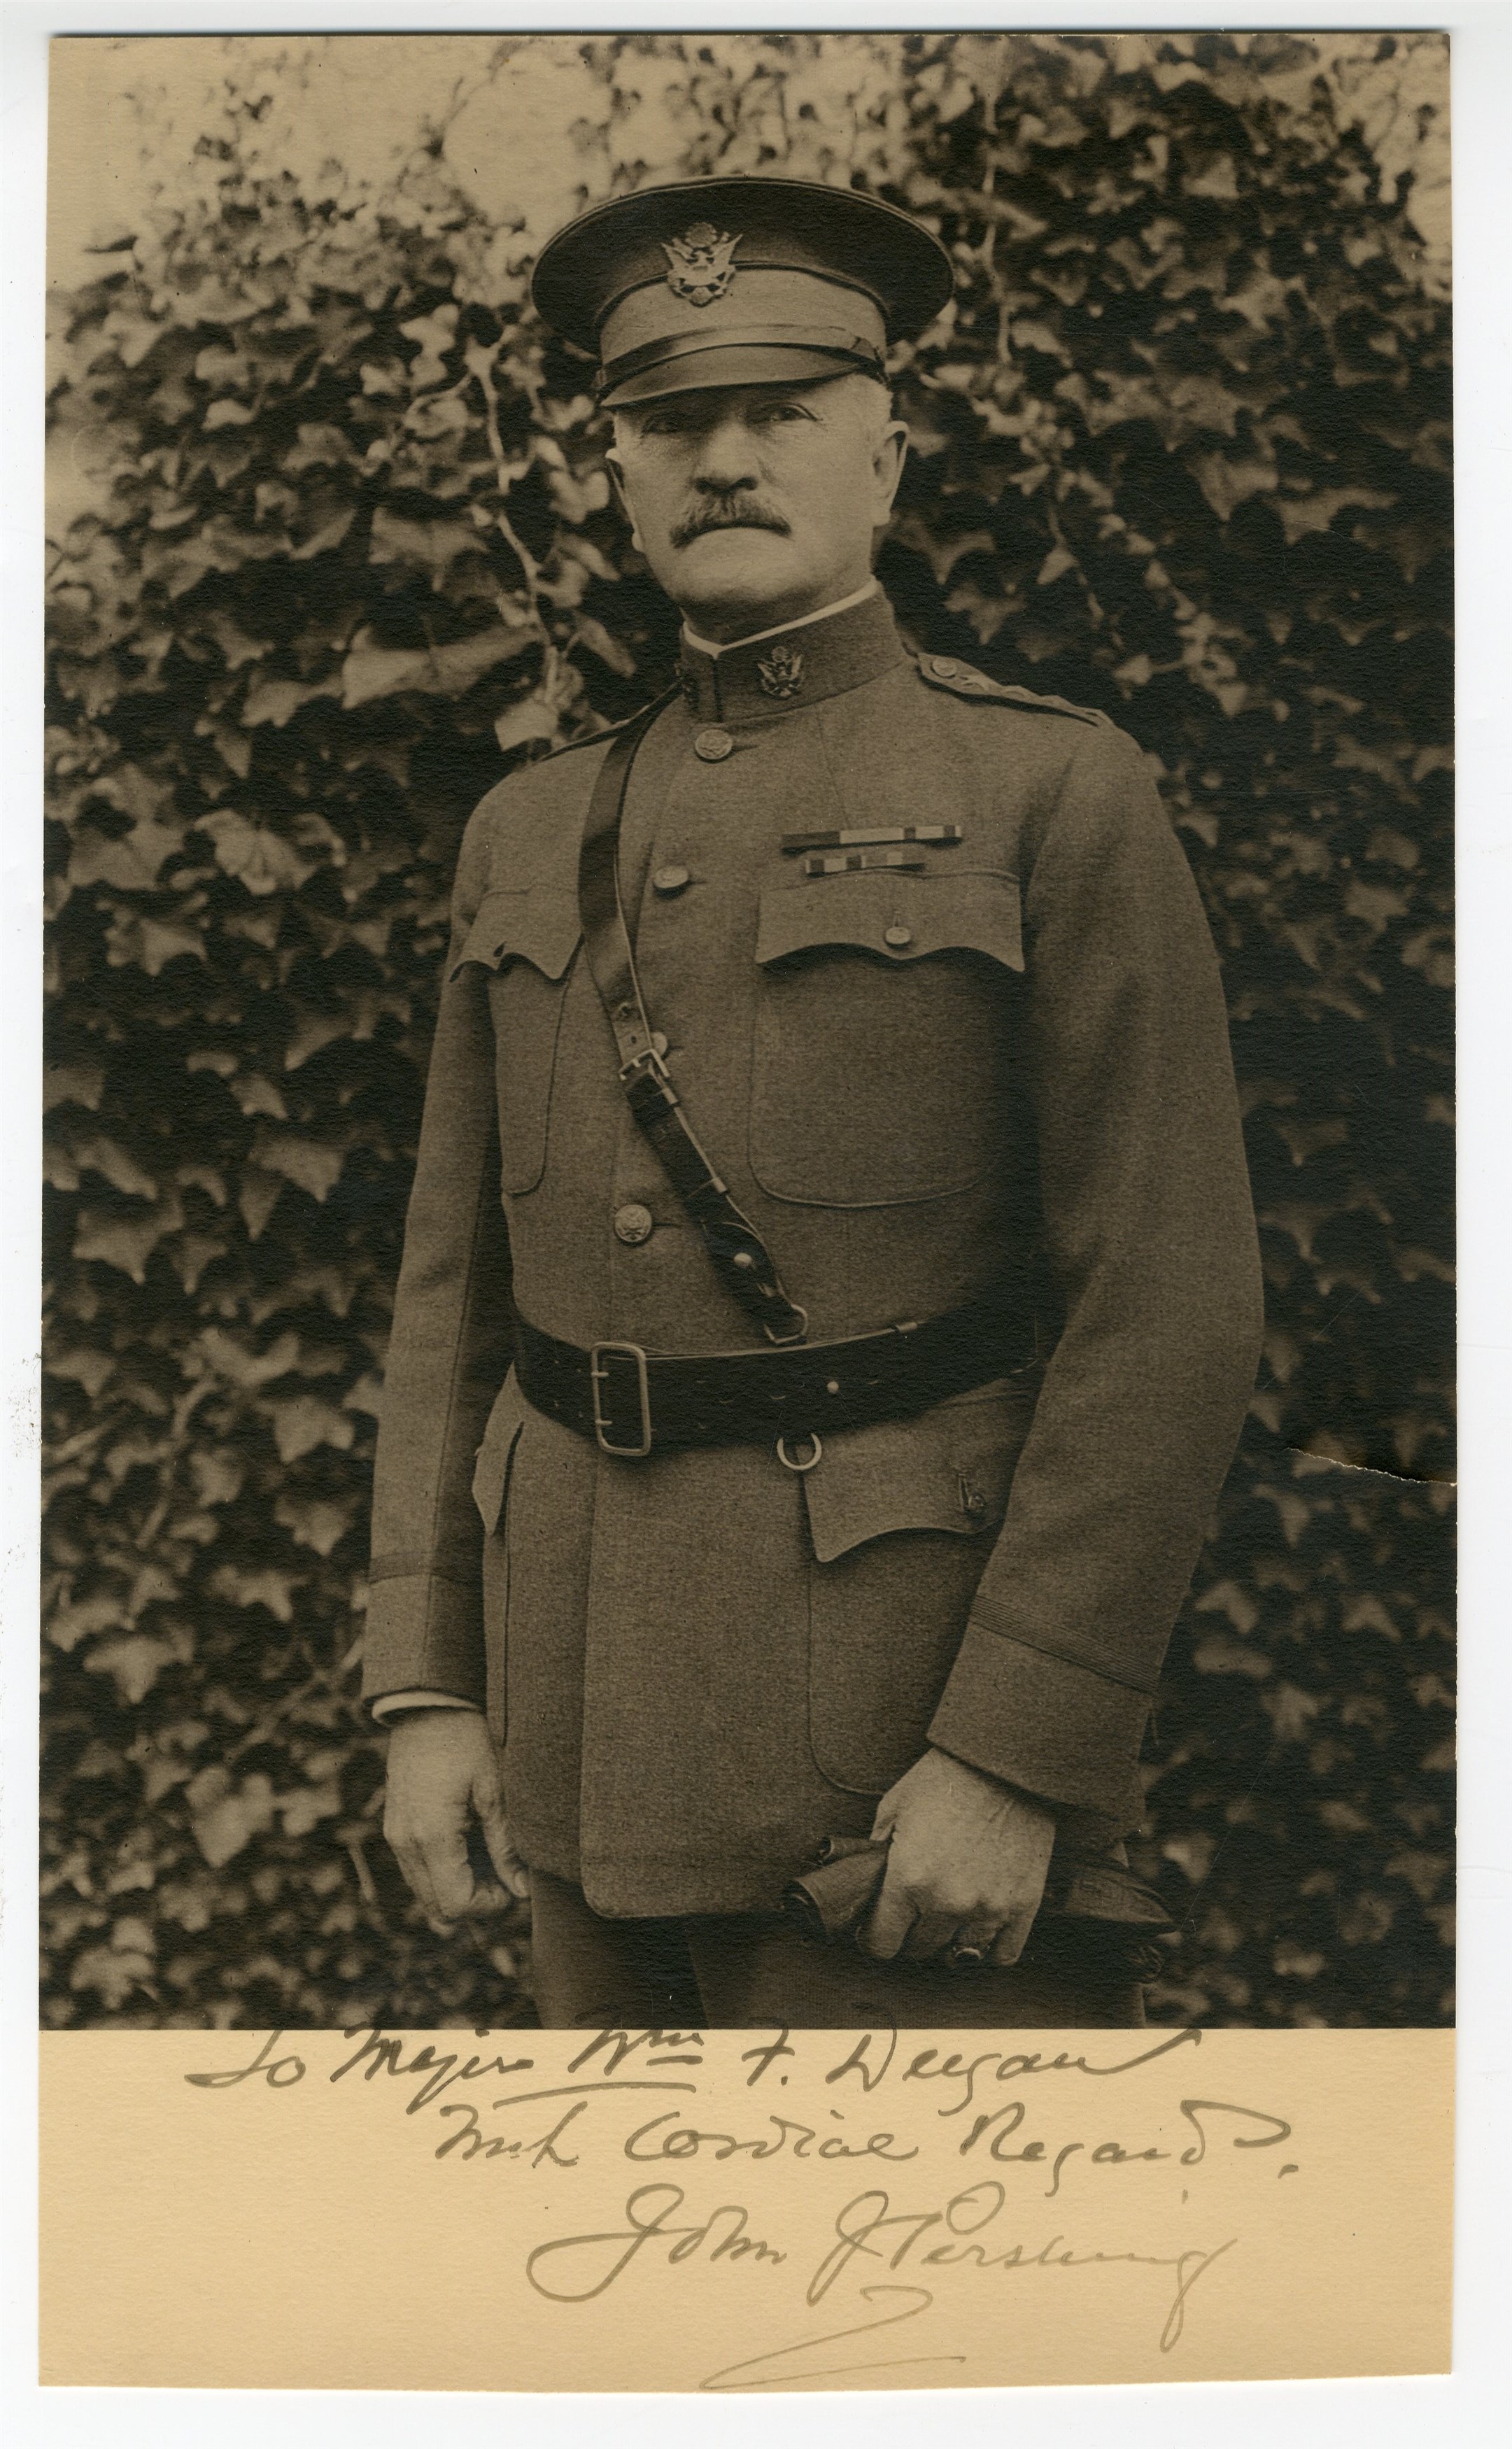 Historical - General John J. Pershing Signed Photo for Major Deegan (PSA/DNA)